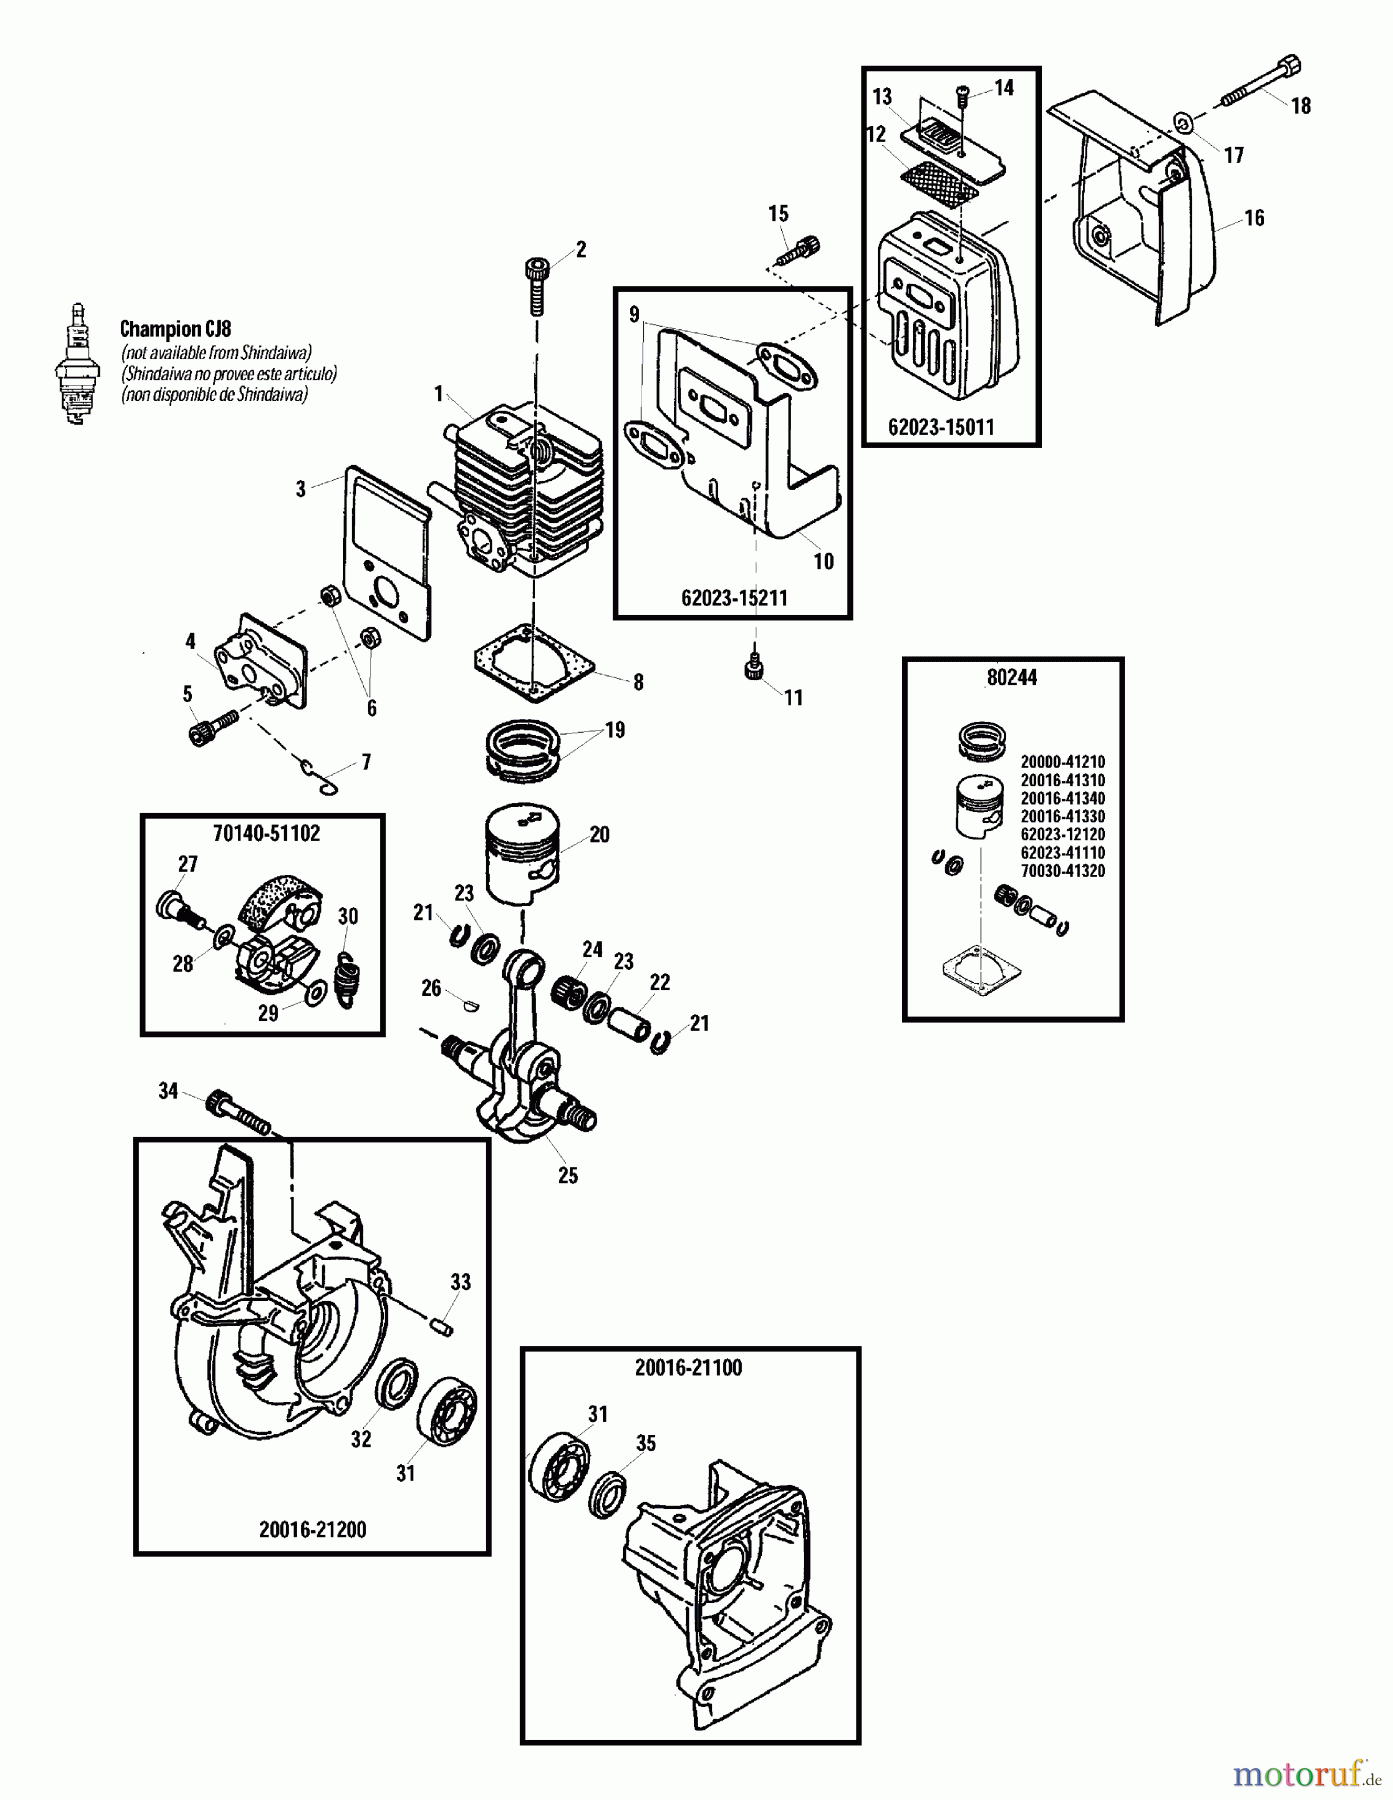  Shindaiwa Heckenscheren AH231 - Shindaiwa Articulating Hedge Trimmer Crankcase, Clyinder, Muffler